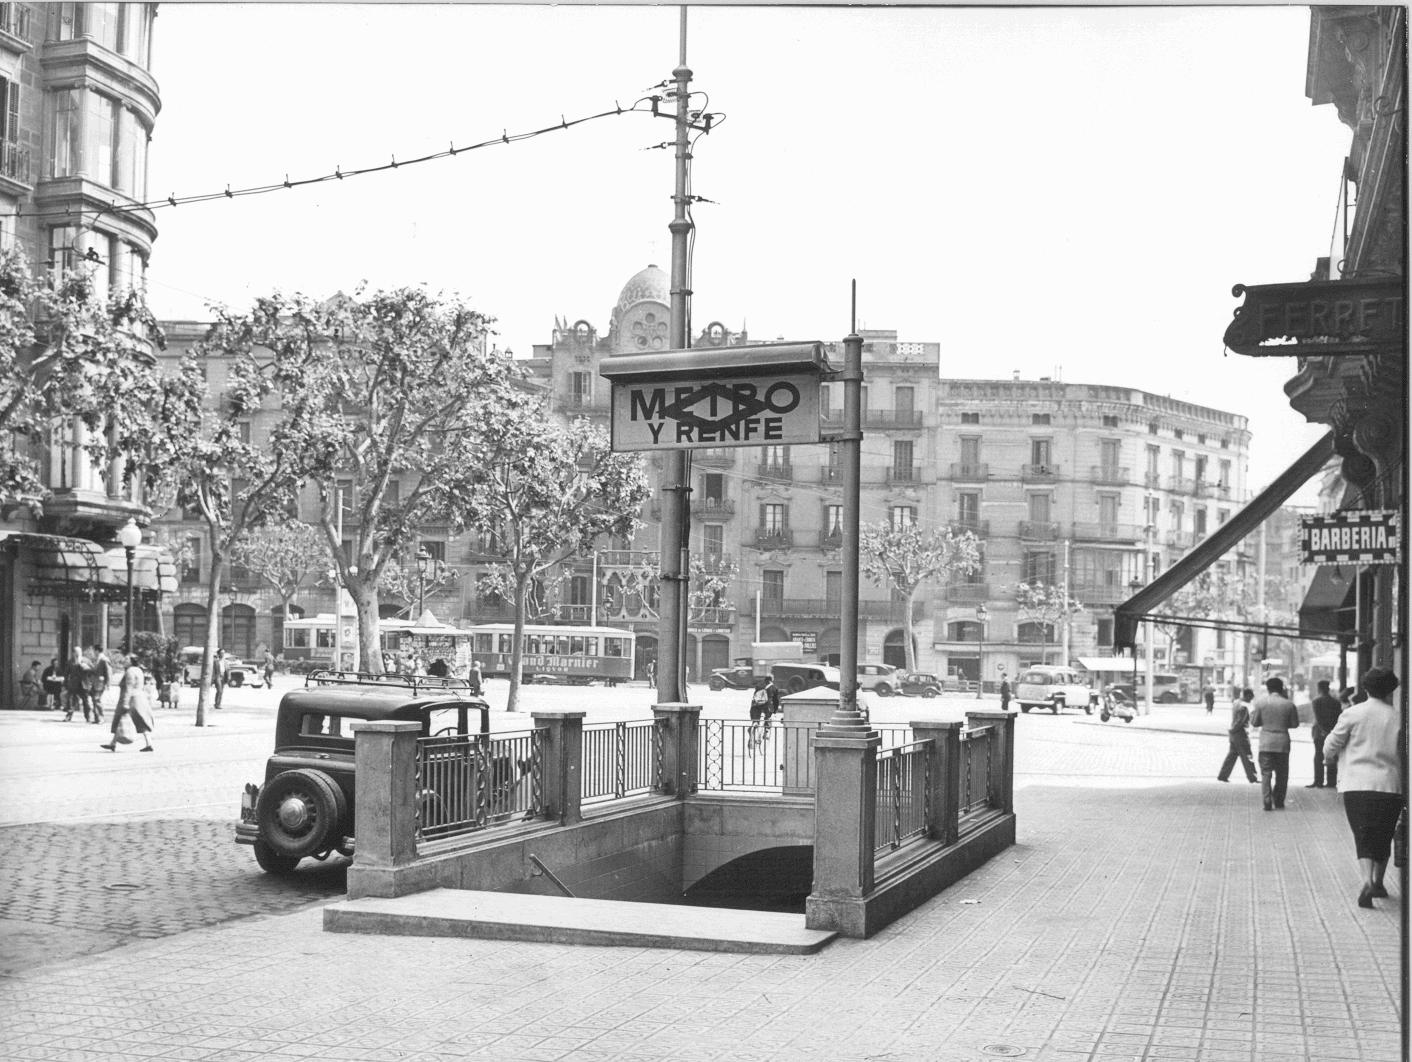 Renfe / ADIF: Barcelona - Arc de Triomf